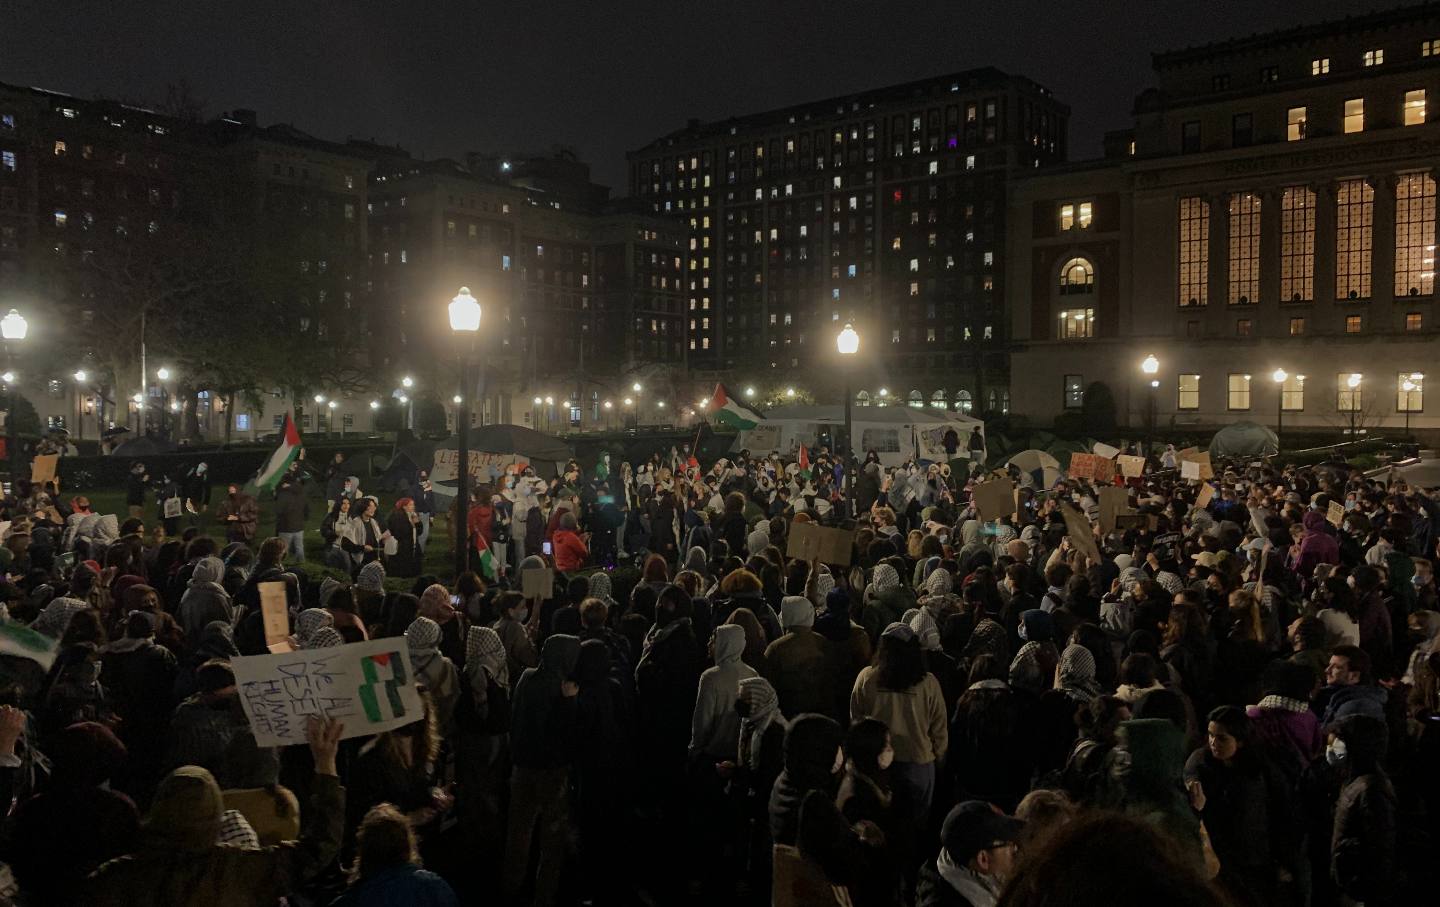 The Gaza Solidarity Encampment at Columbia University